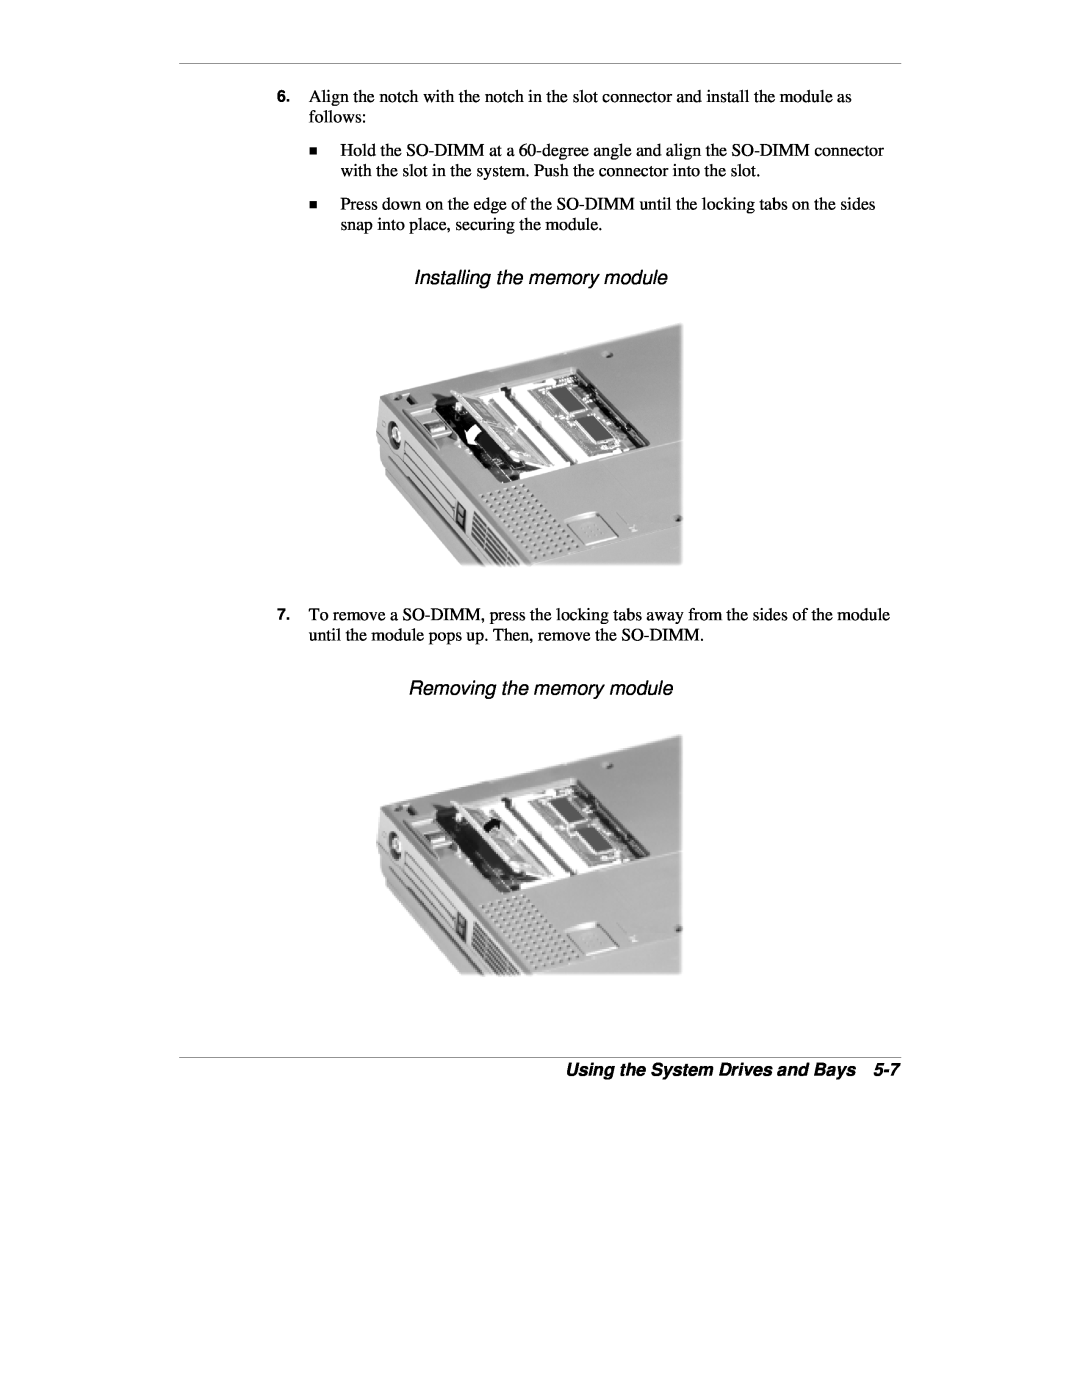 NEC VXi manual Installing the memory module, Removing the memory module, Using the System Drives and Bays 